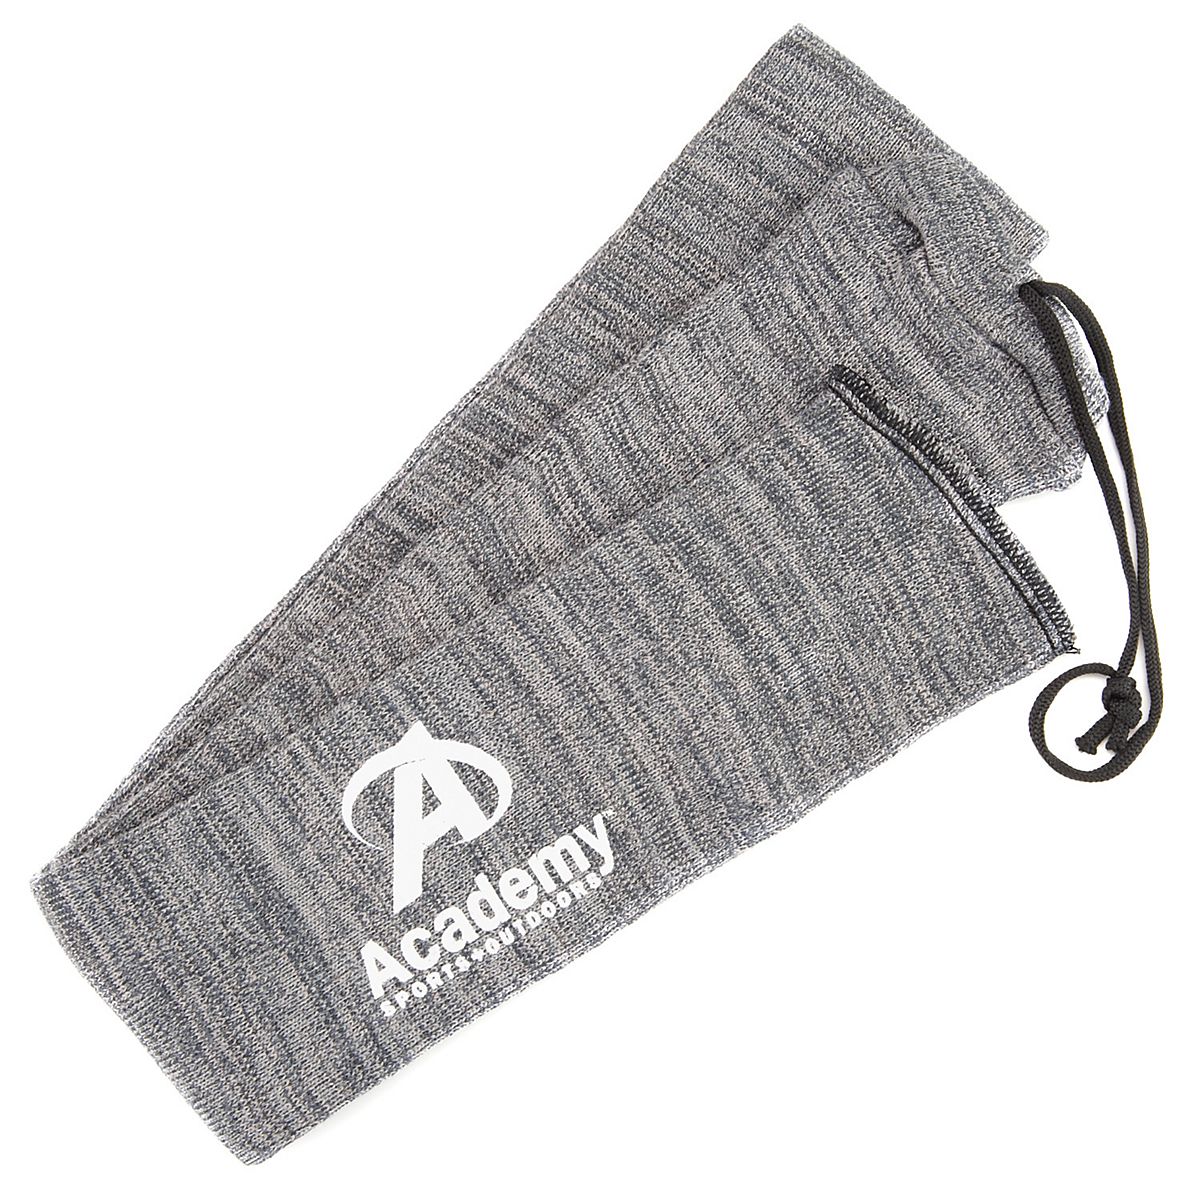 Allen Company Academy Sports Outdoors Green Gun Sock for sale online 